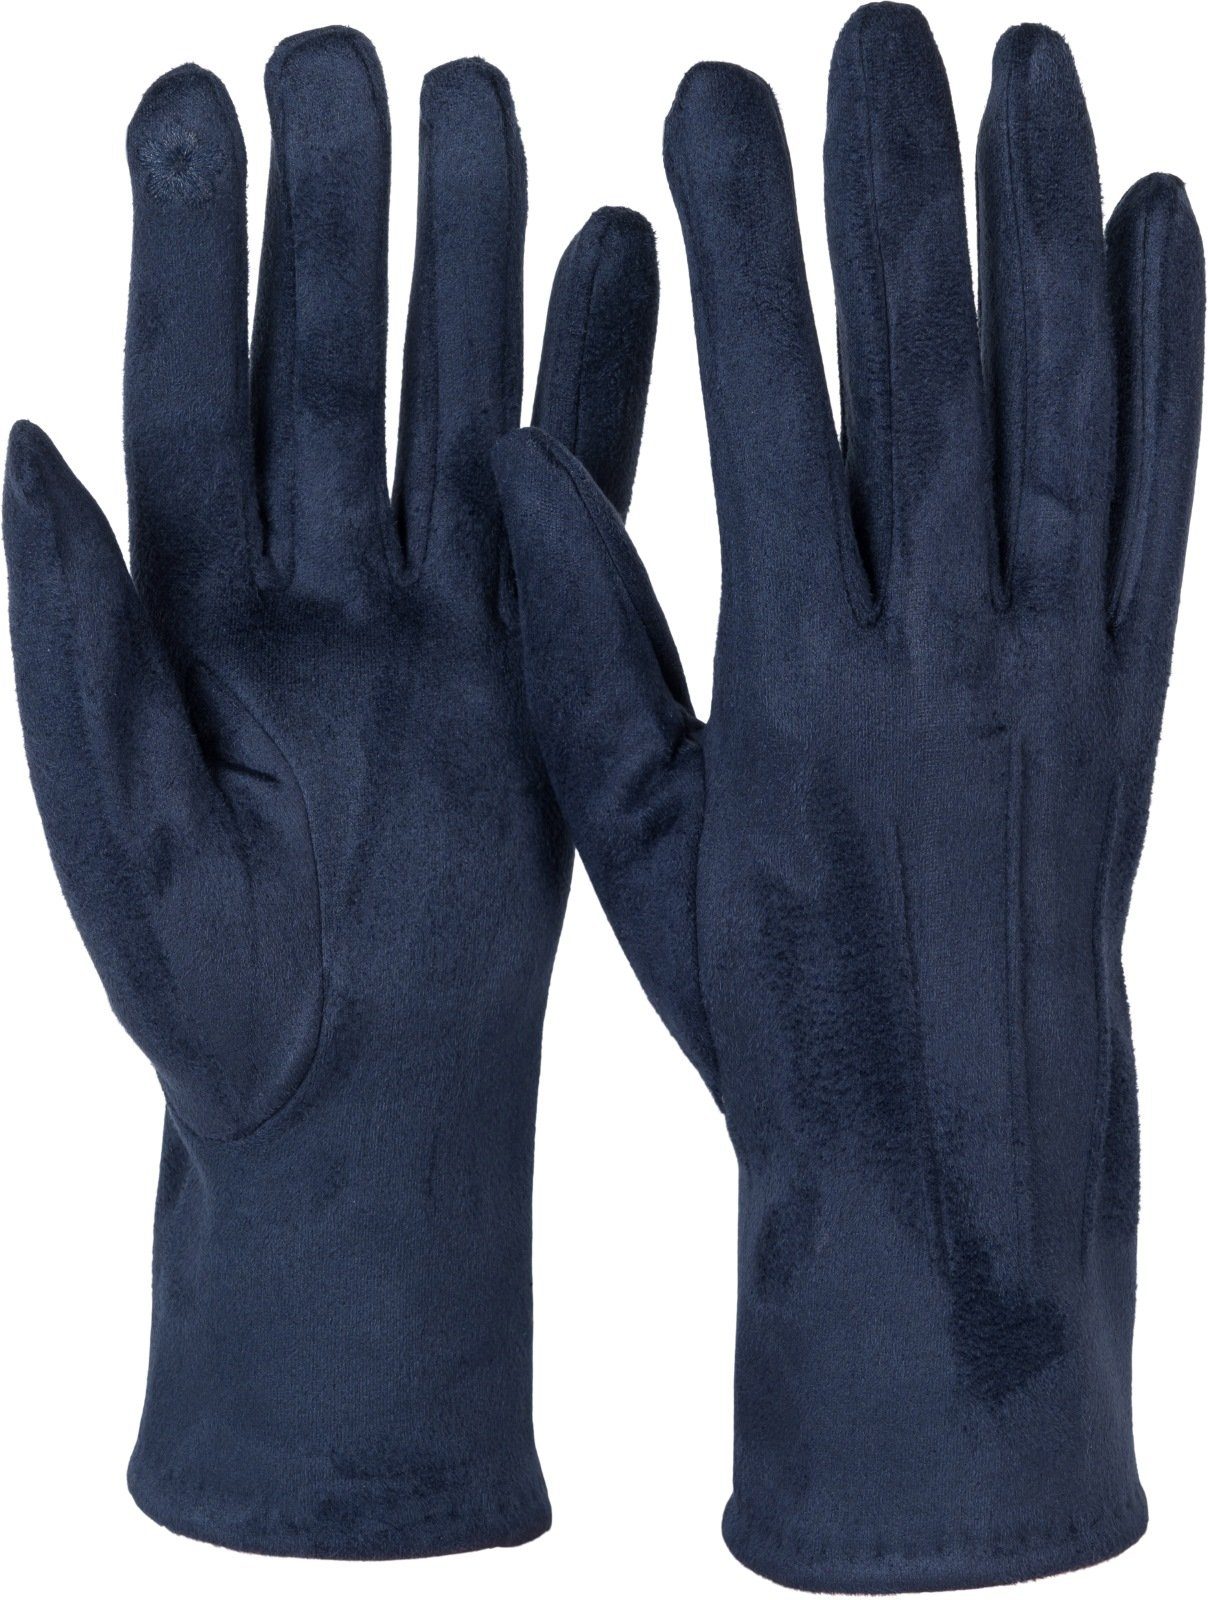 Touchscreen Handschuhe Fleecehandschuhe Einfarbige Ziernähte styleBREAKER Dunkelblau